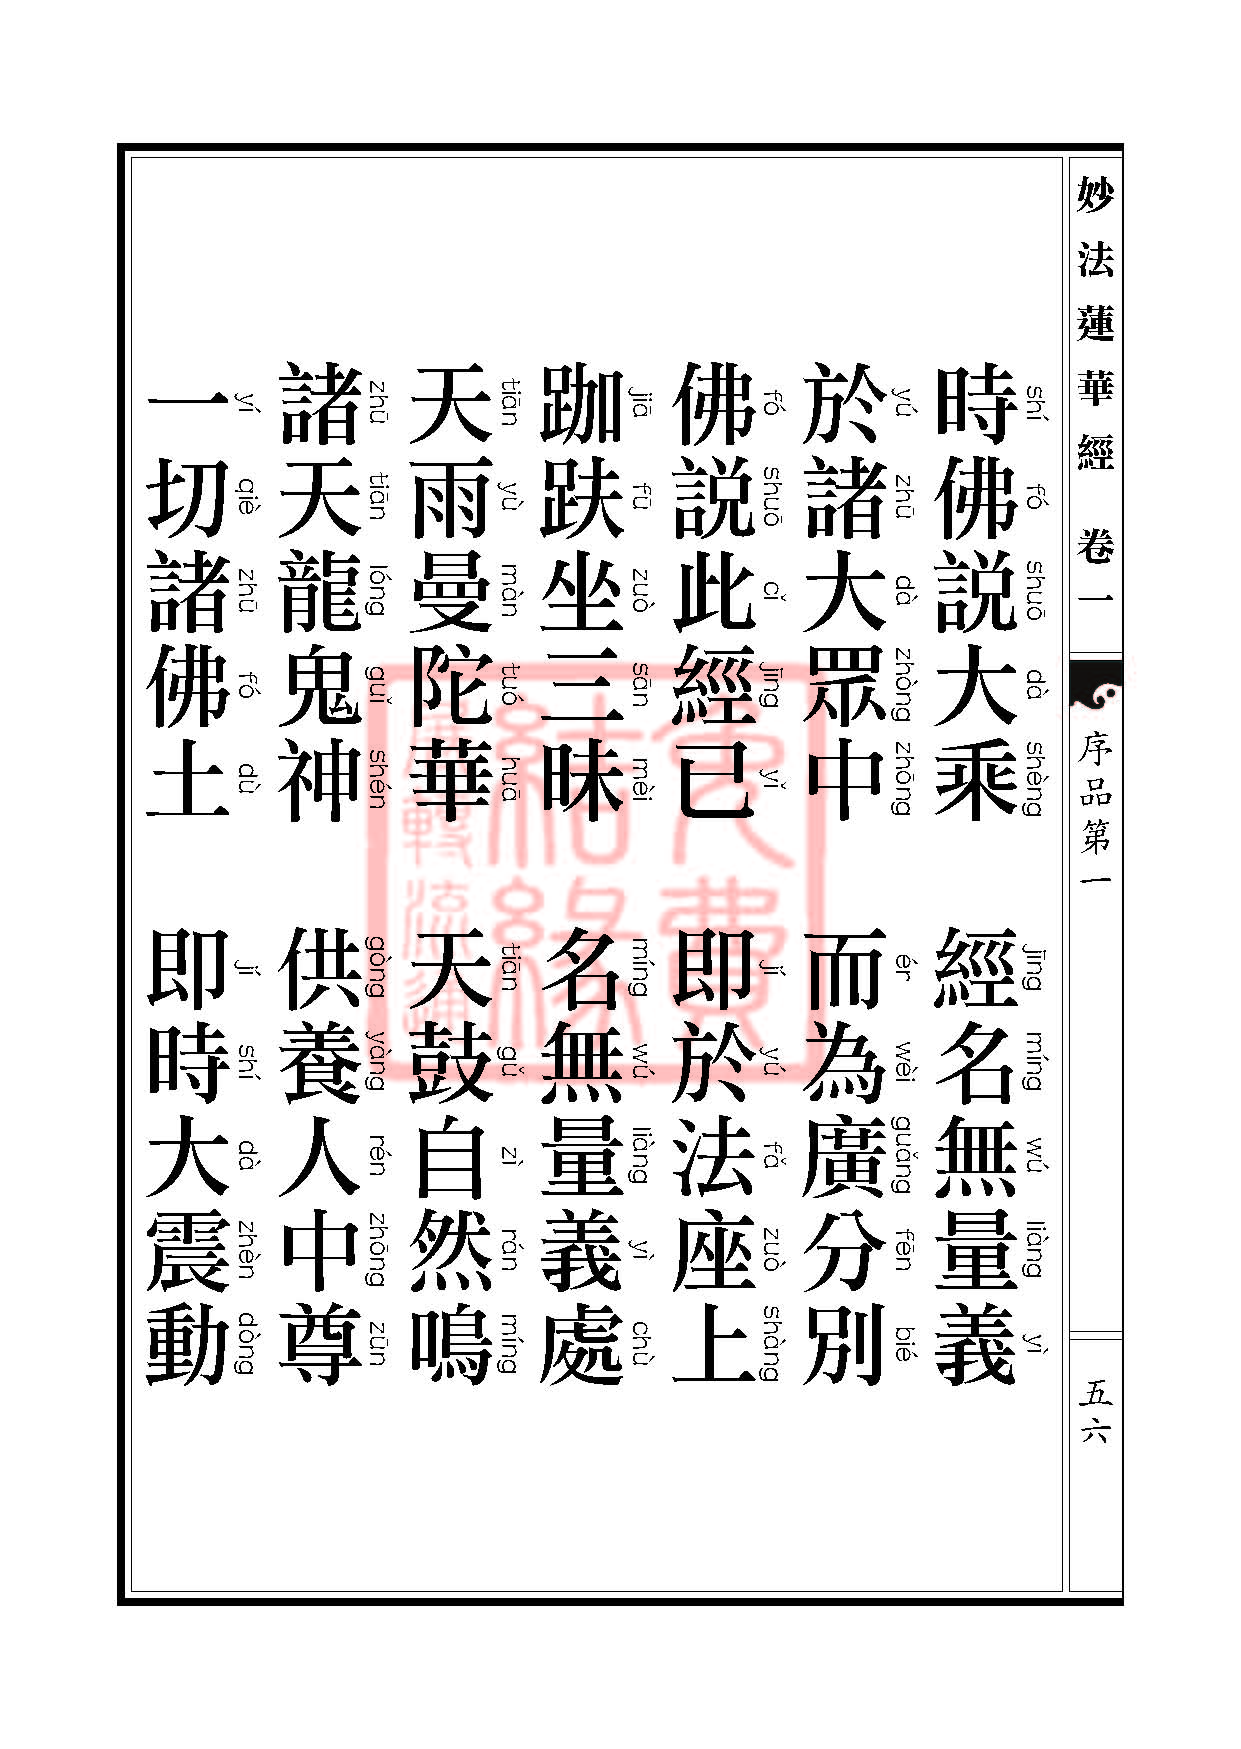 Book_FHJ_HK-A6-PY_Web_页面_056.jpg